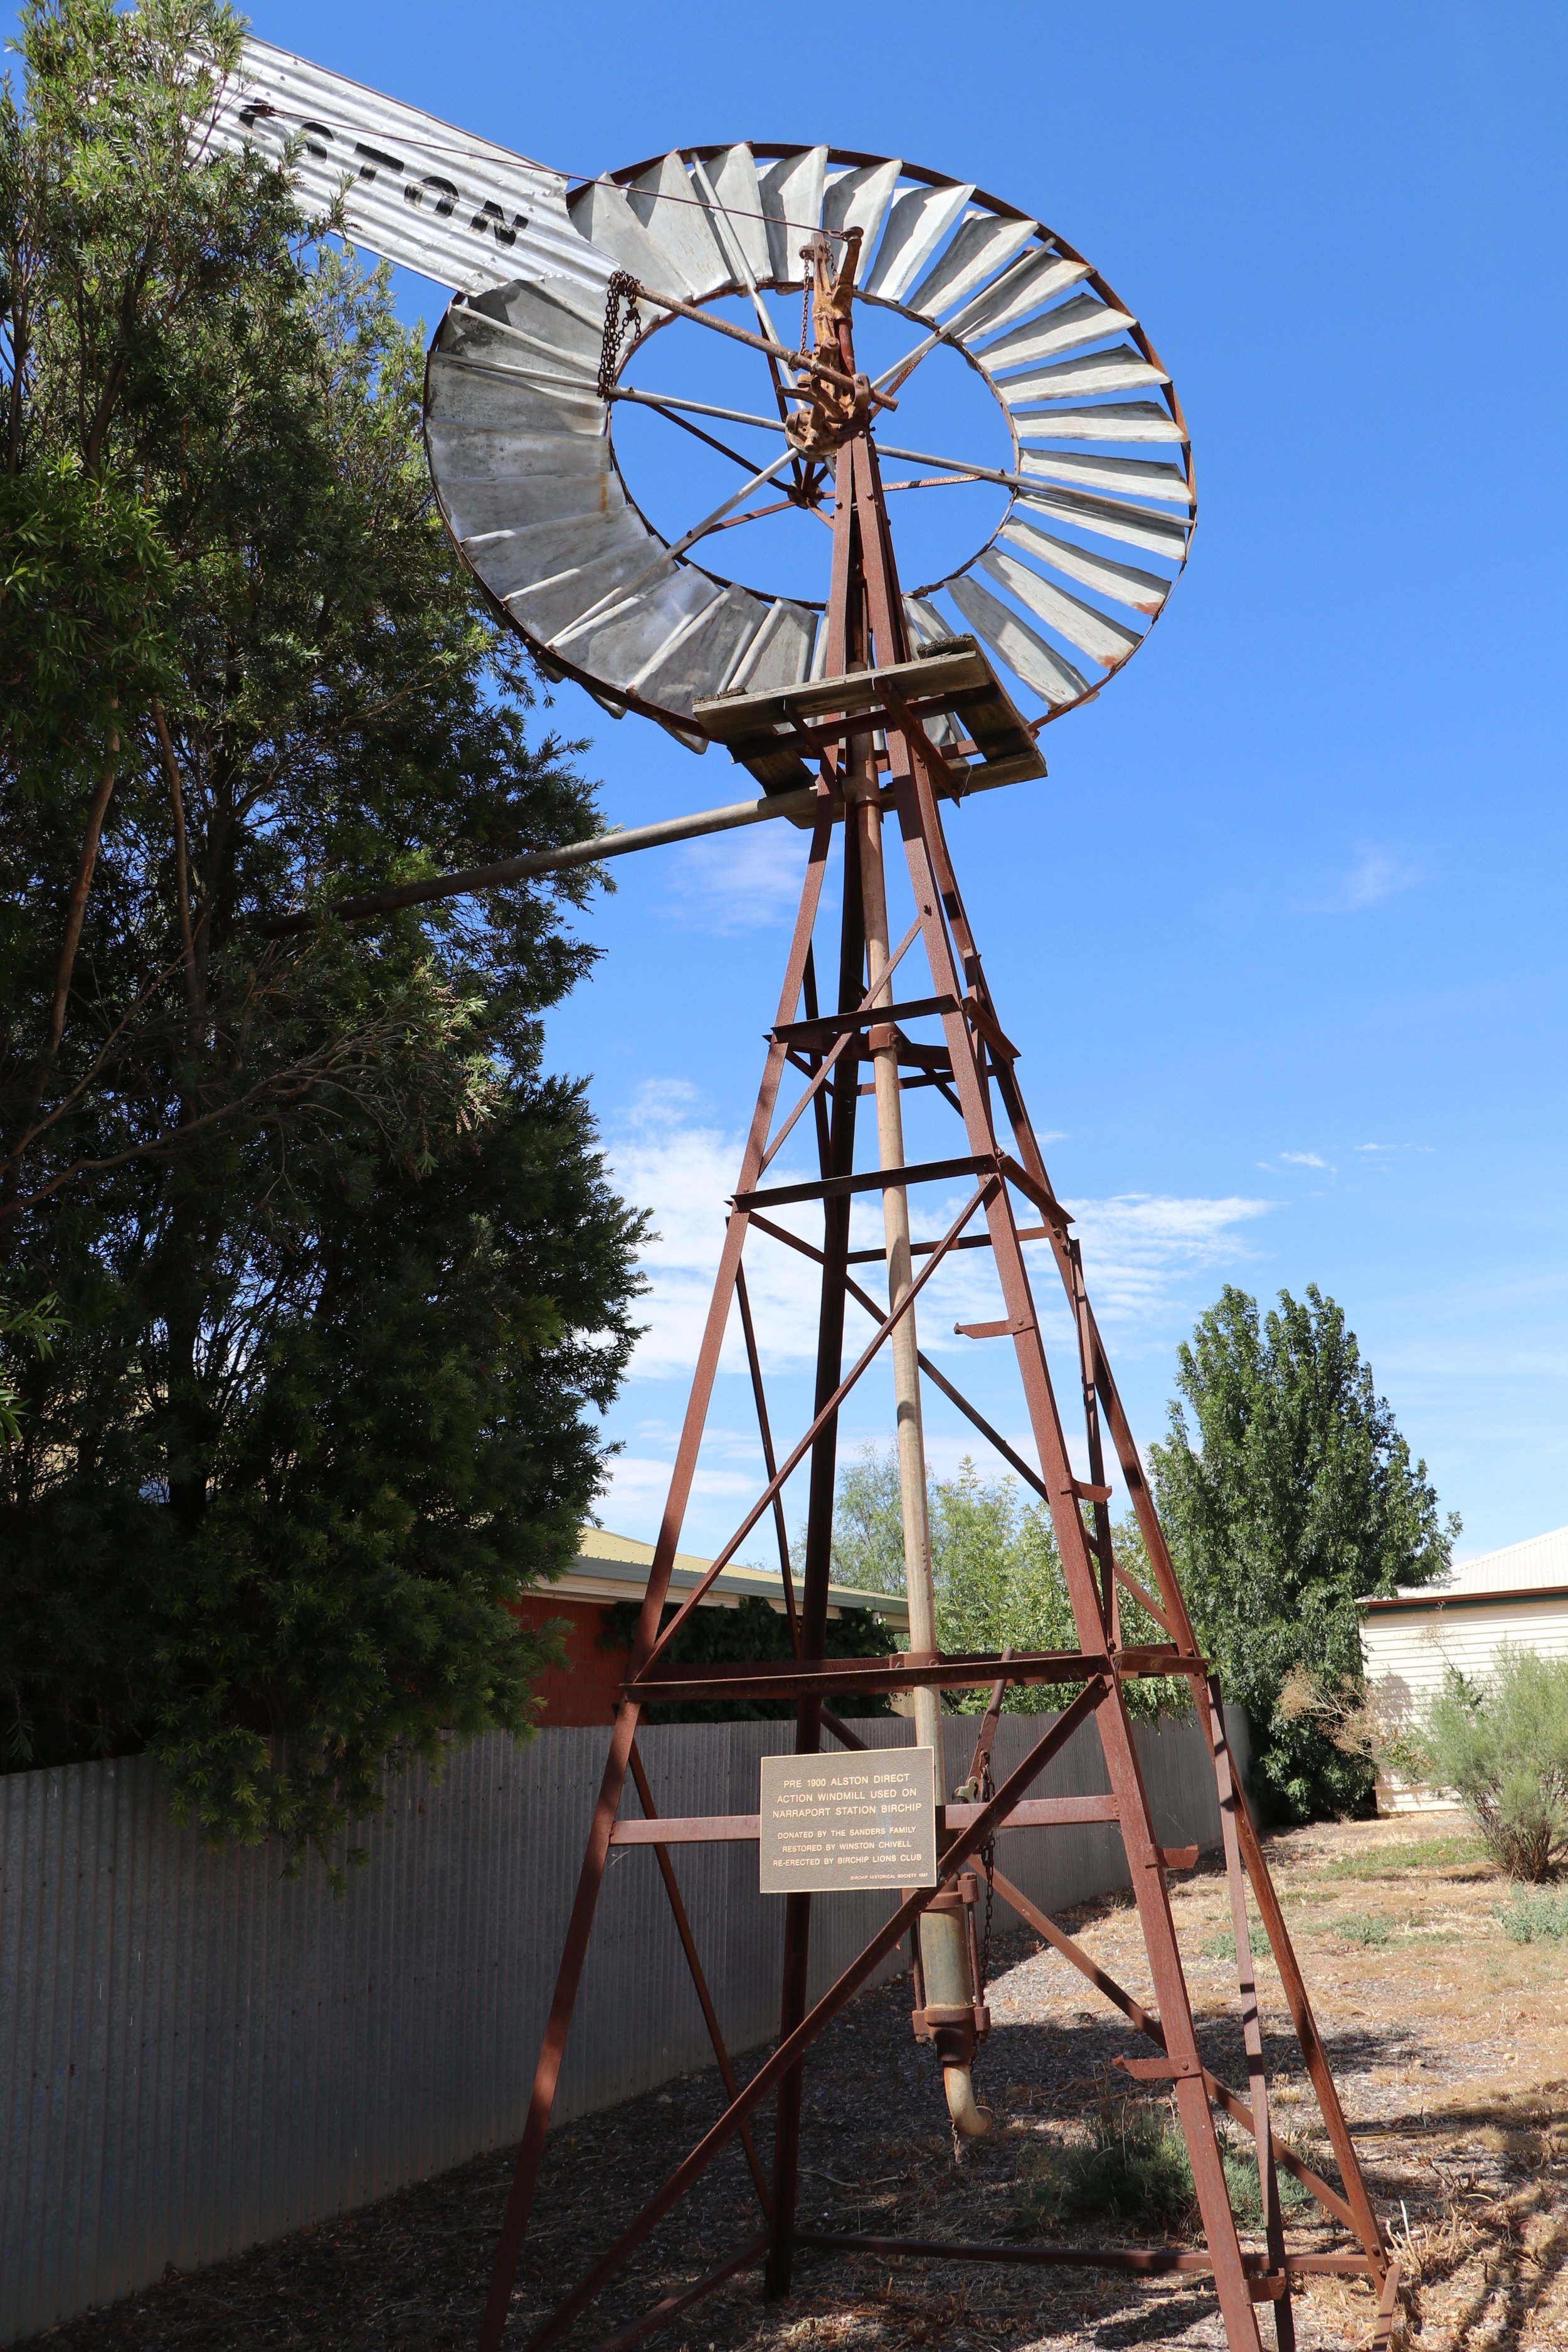 5. Historical Windmill